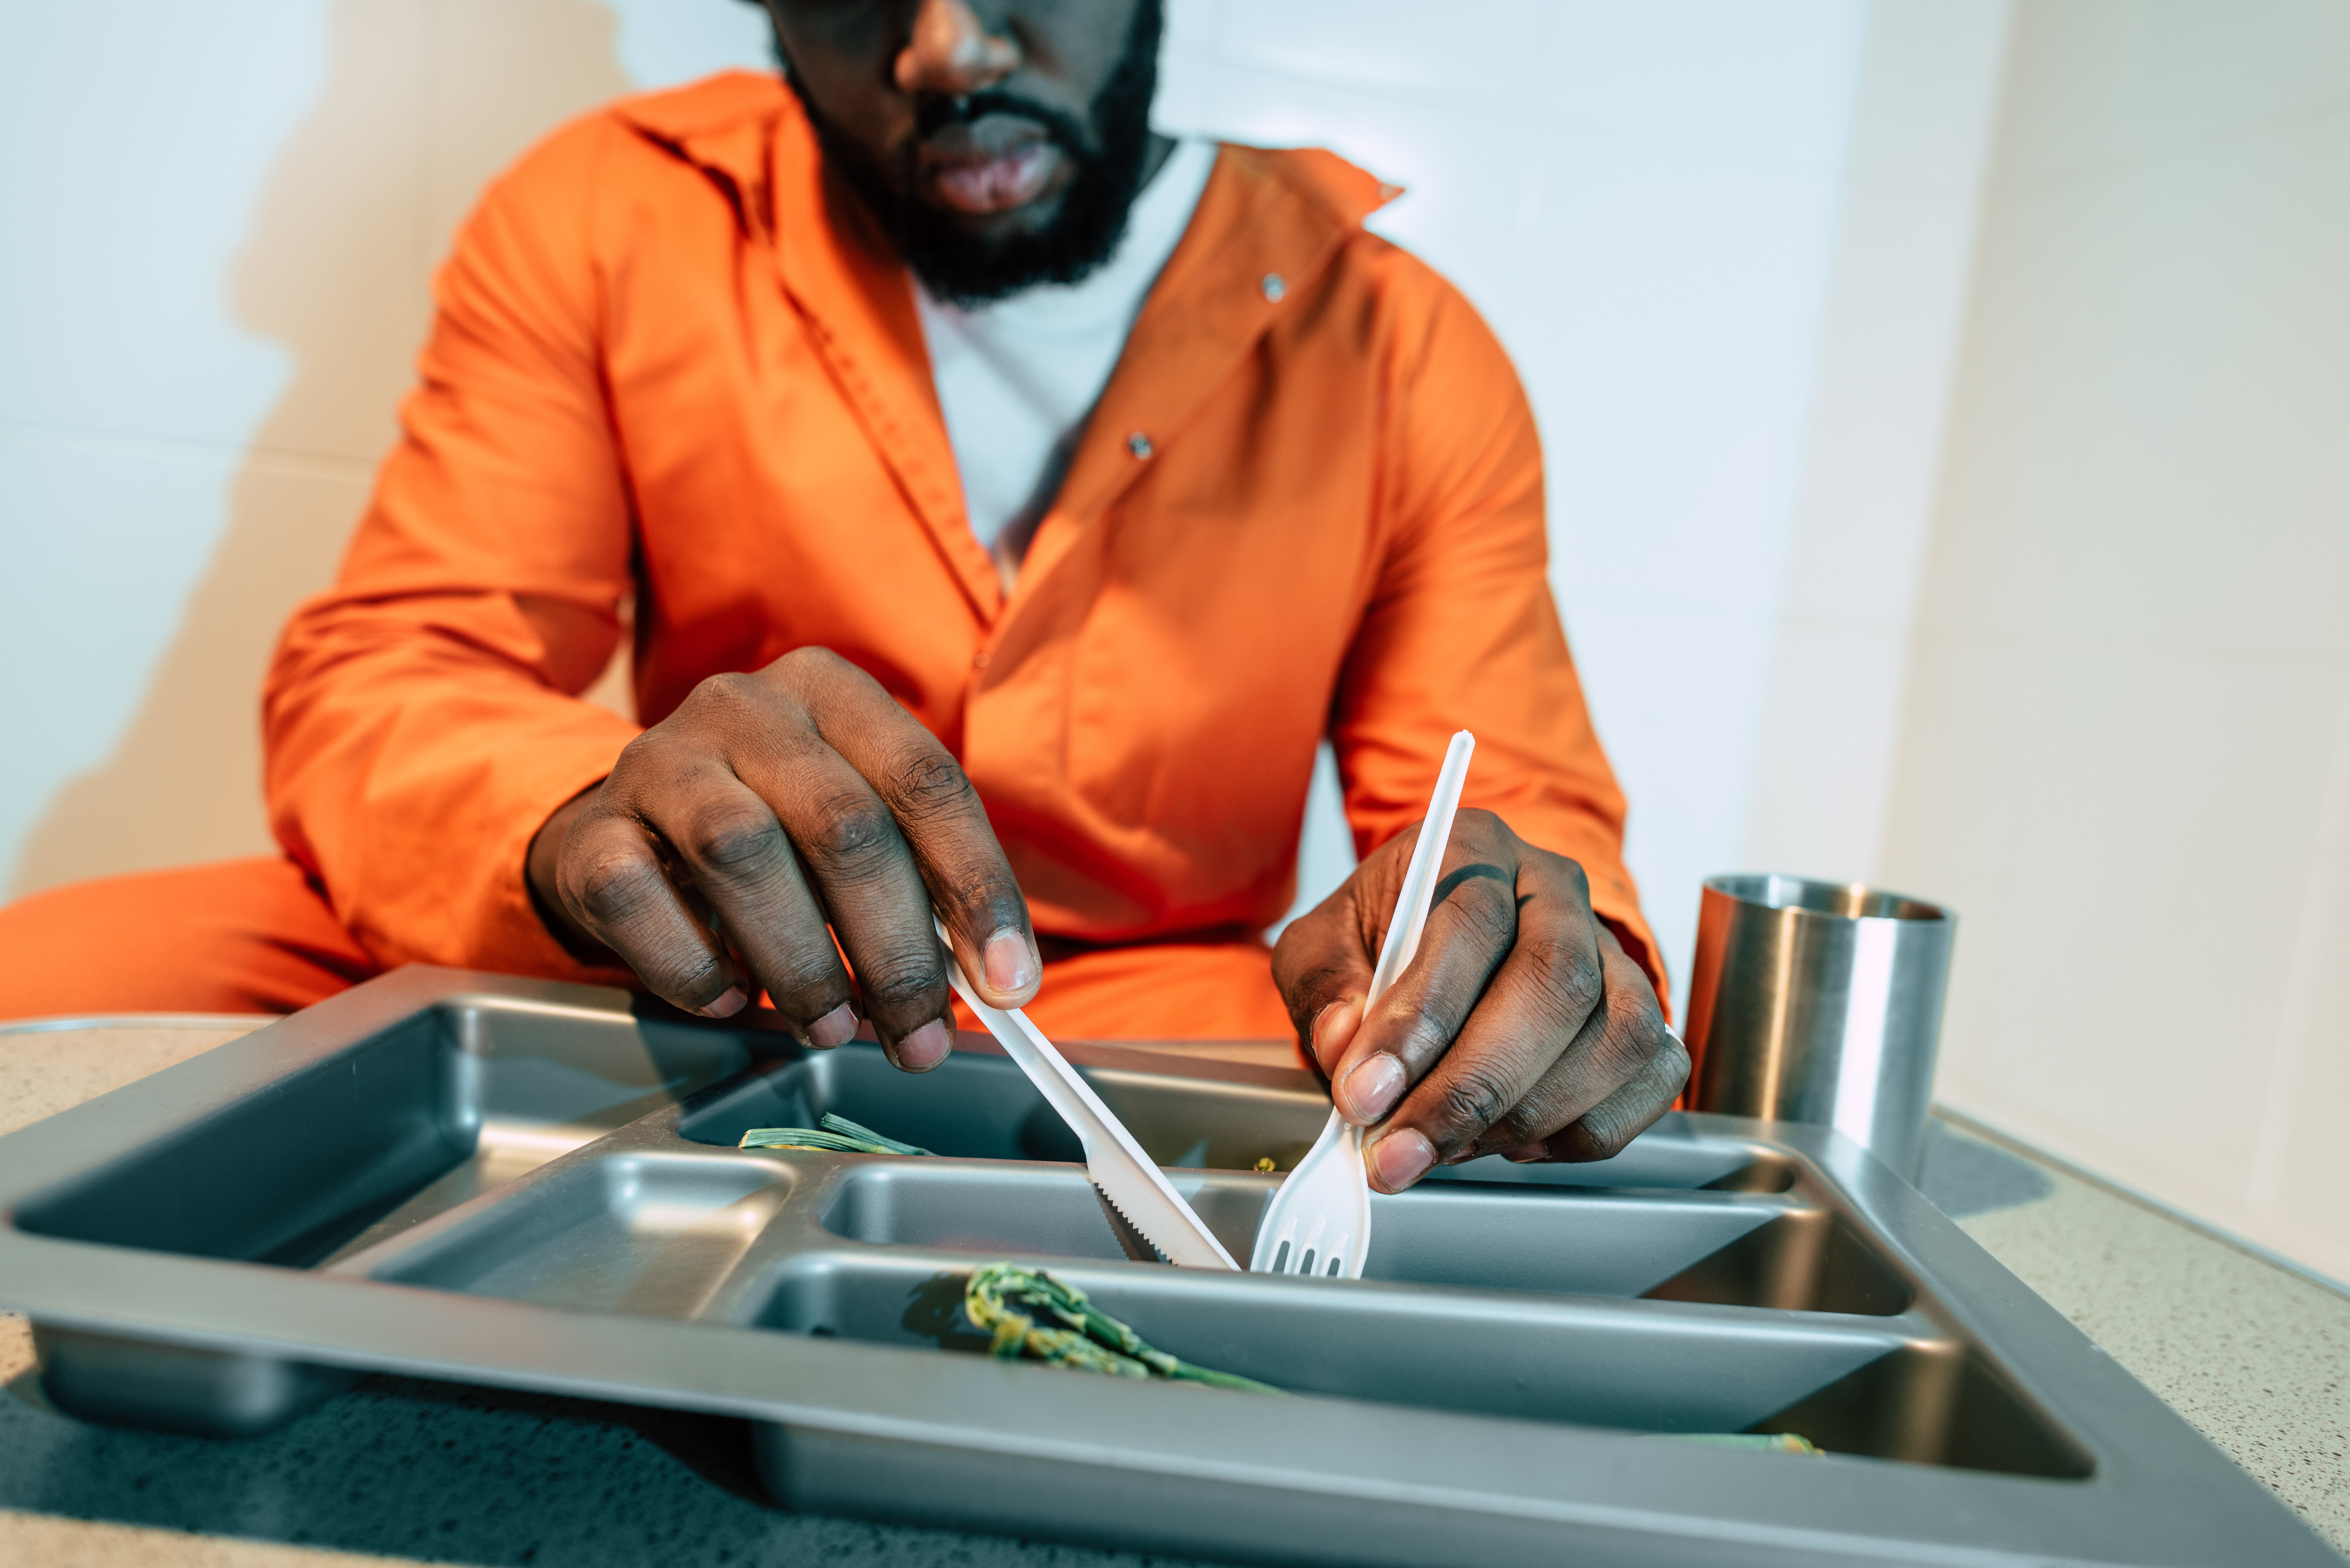 Un prisionero come en su celda. | Foto: Shutterstock